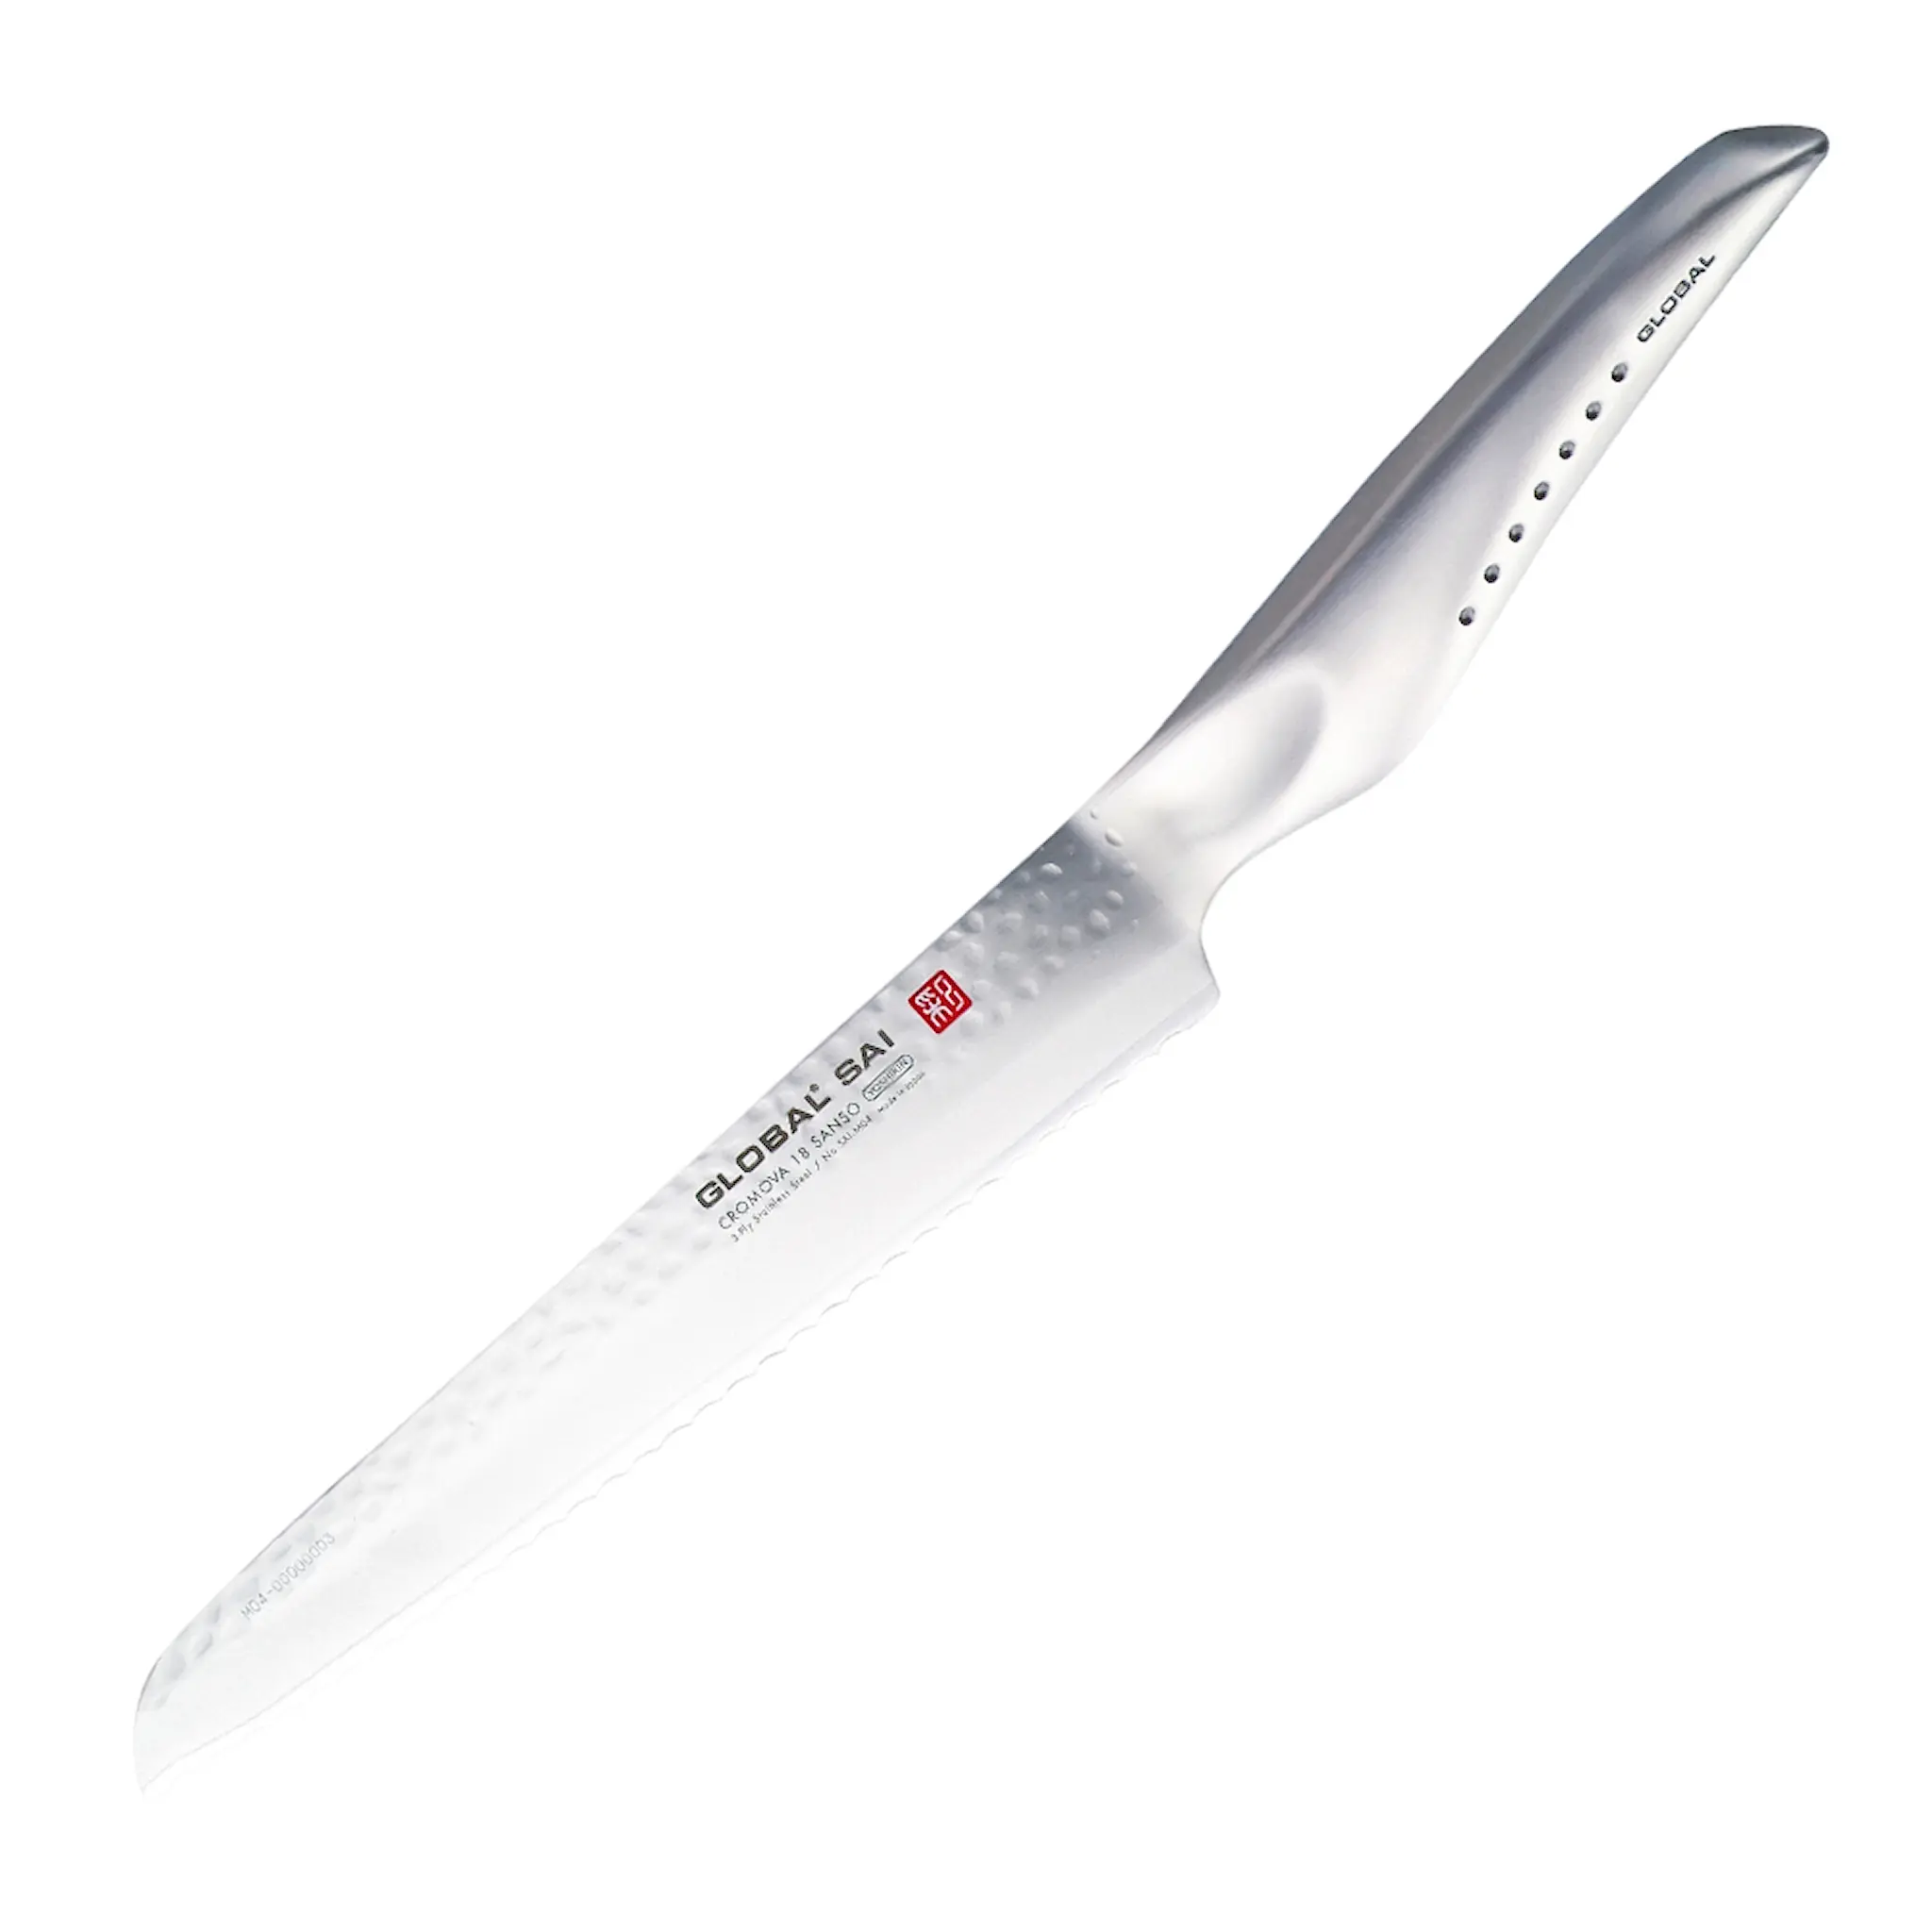 Global SAI-M04 brødkniv 17 cm